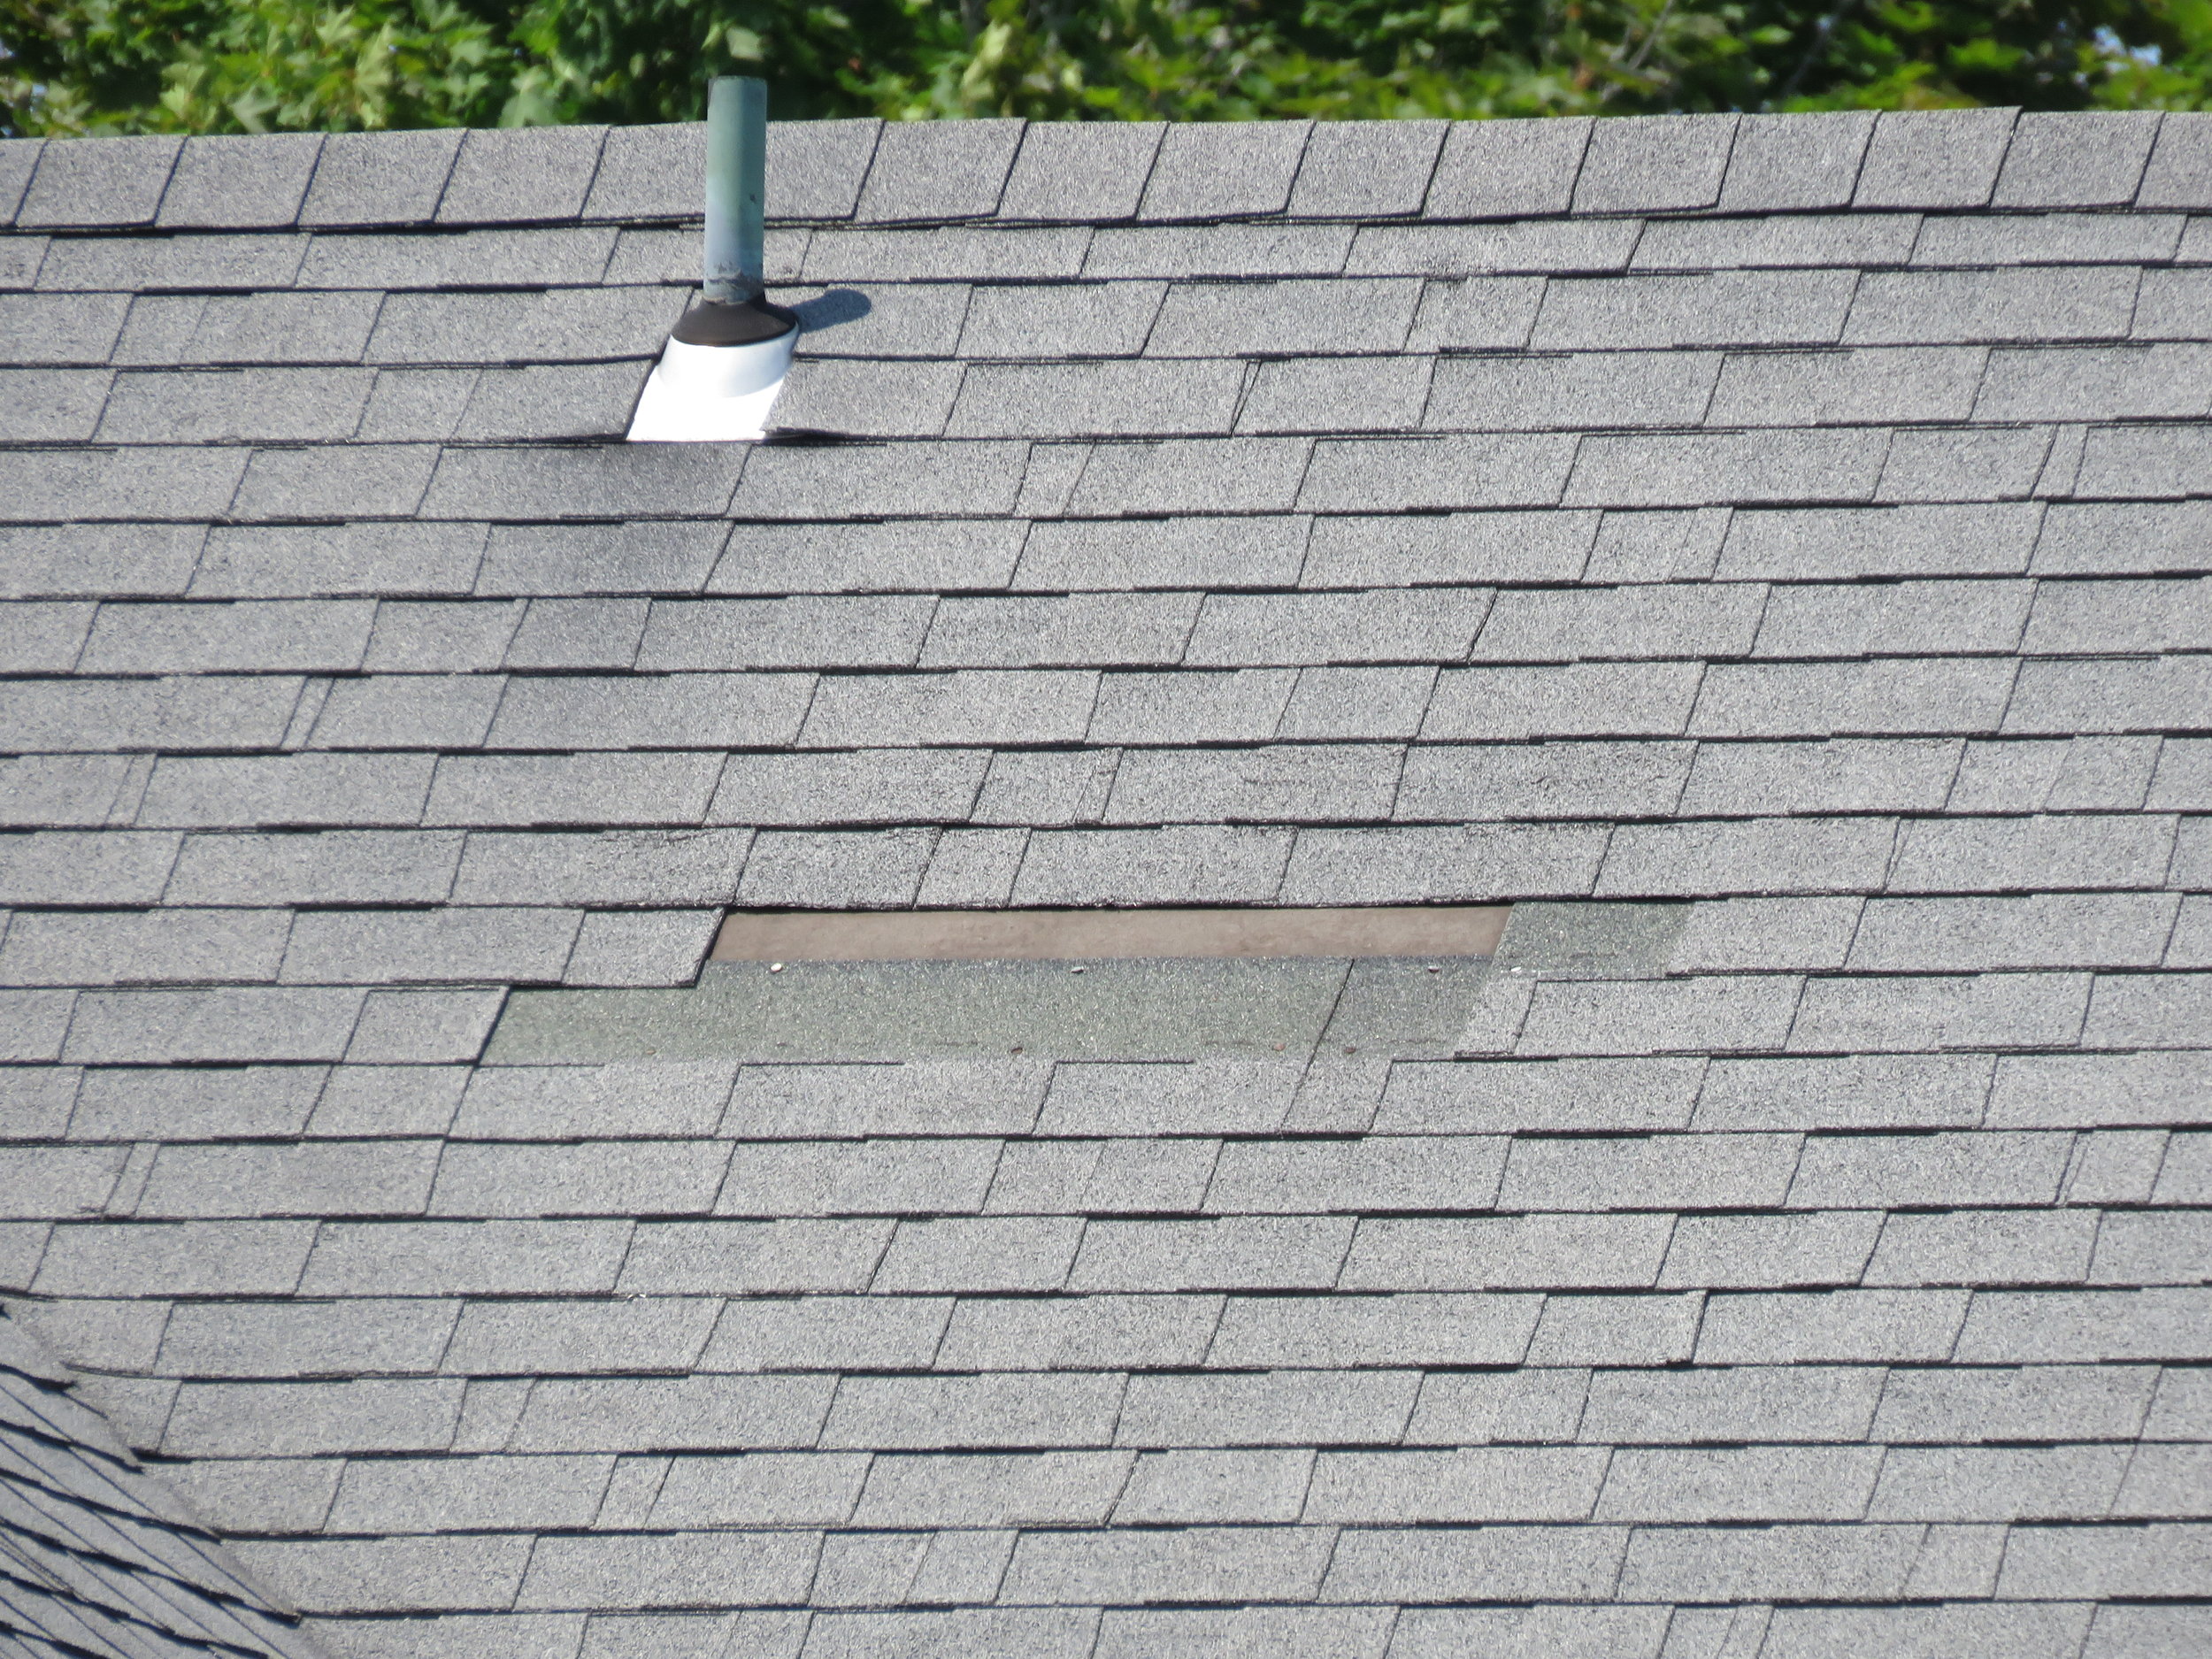 replace a missing shingle like this one on an asphalt shingle roof.